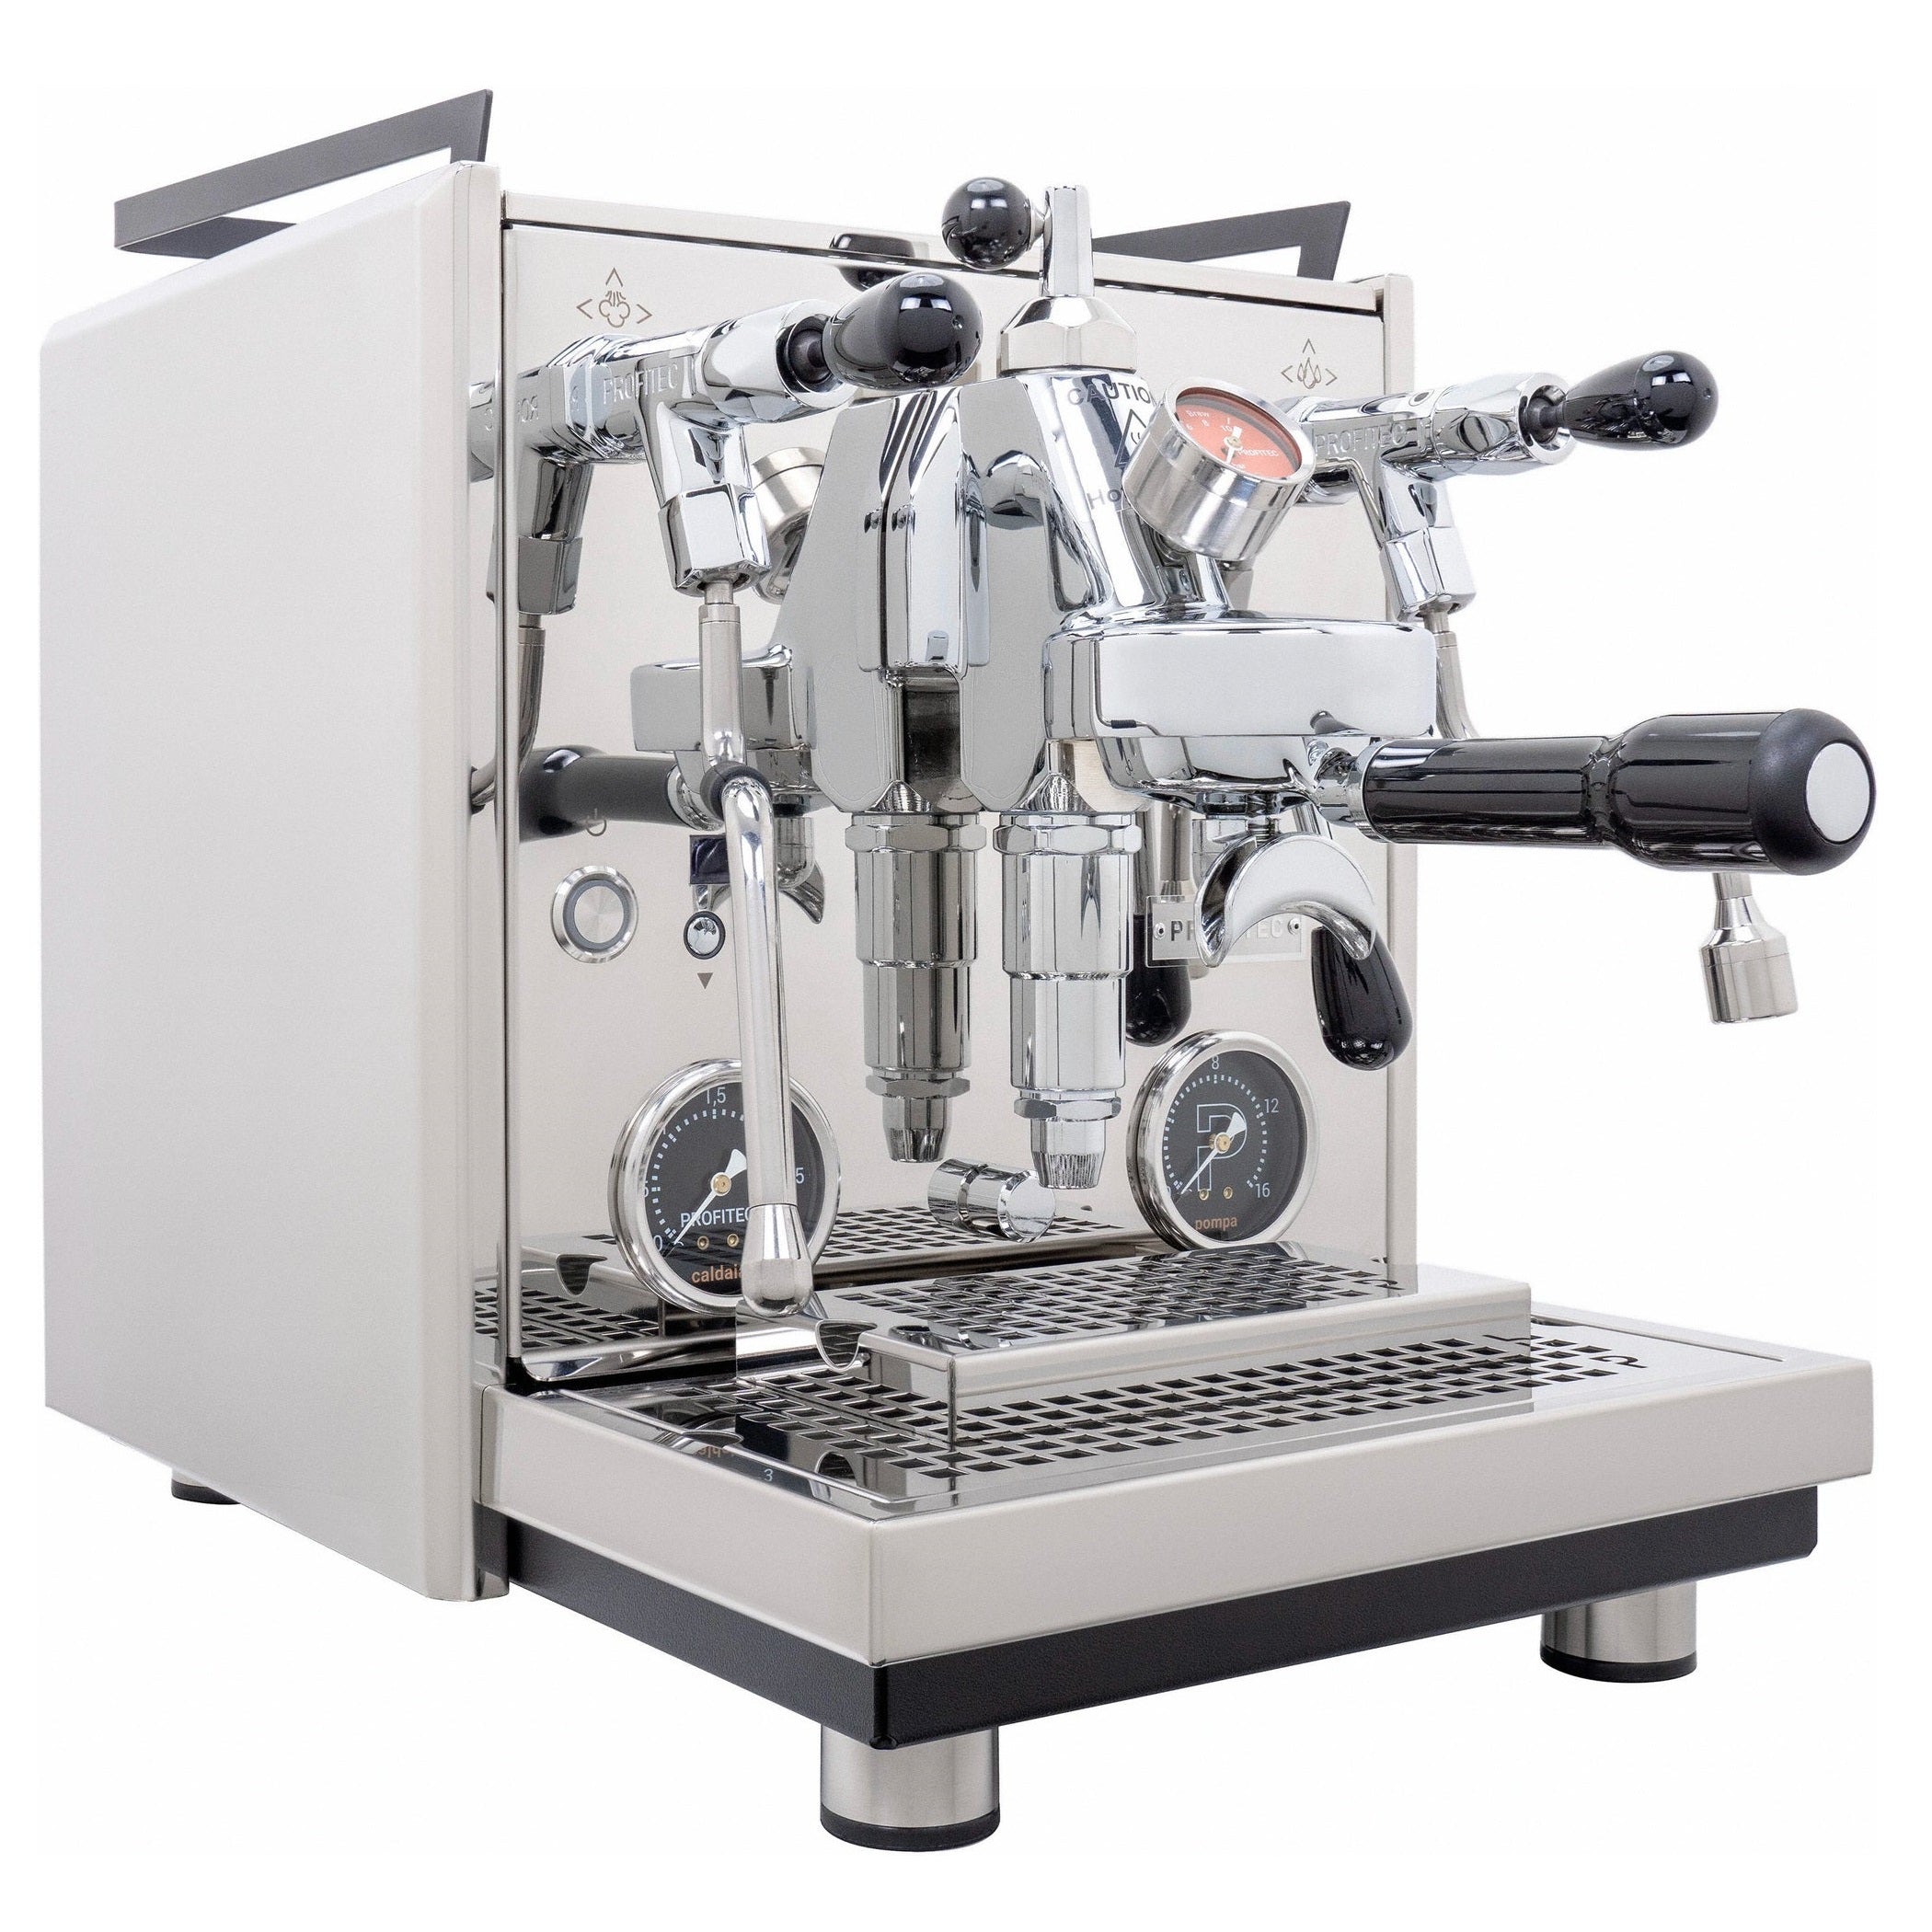 Profitec Drive Espresso Machine